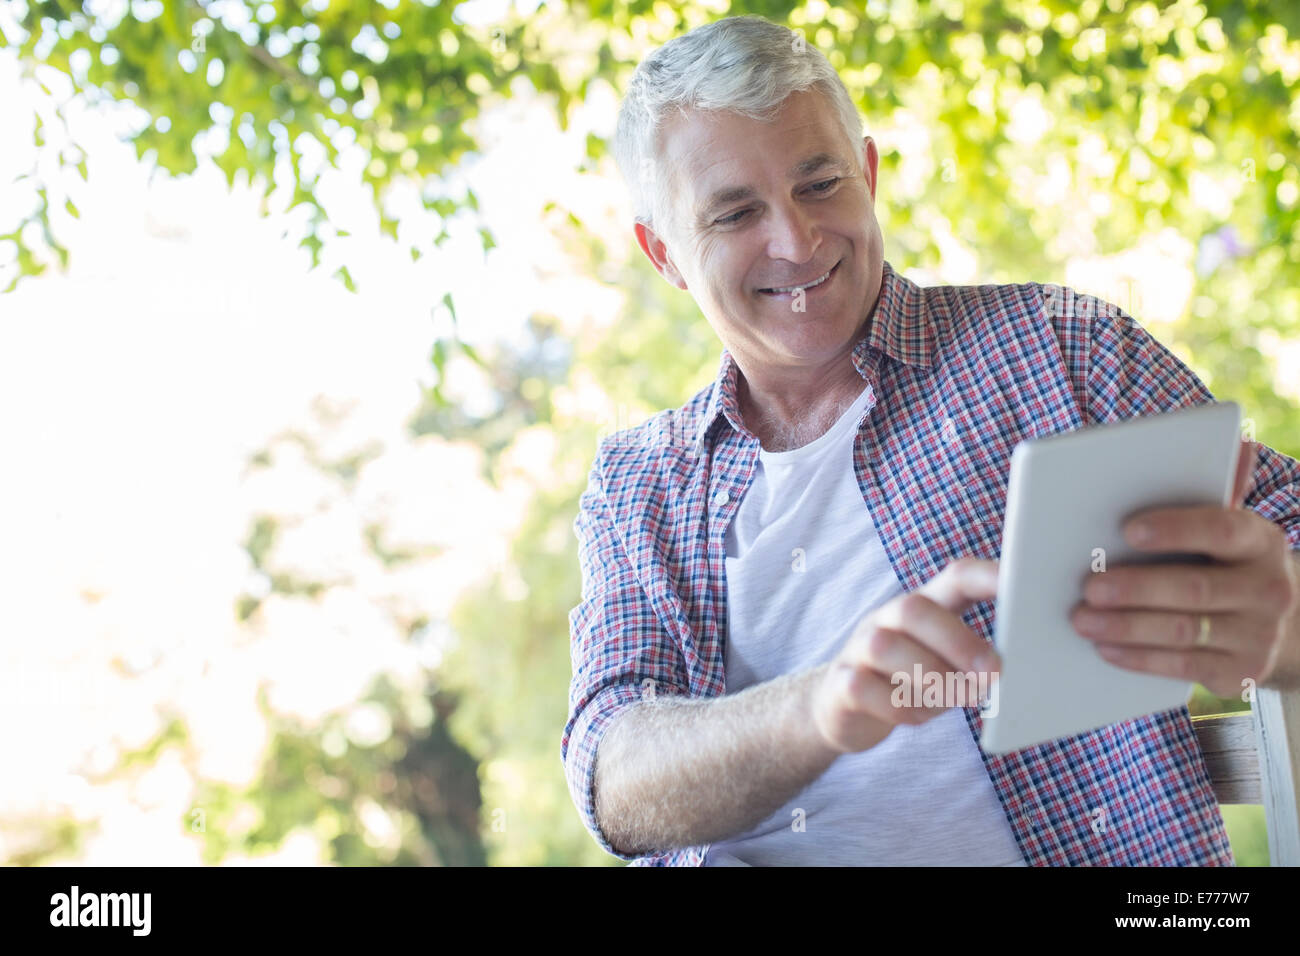 Older man using digital tablet outdoors Stock Photo